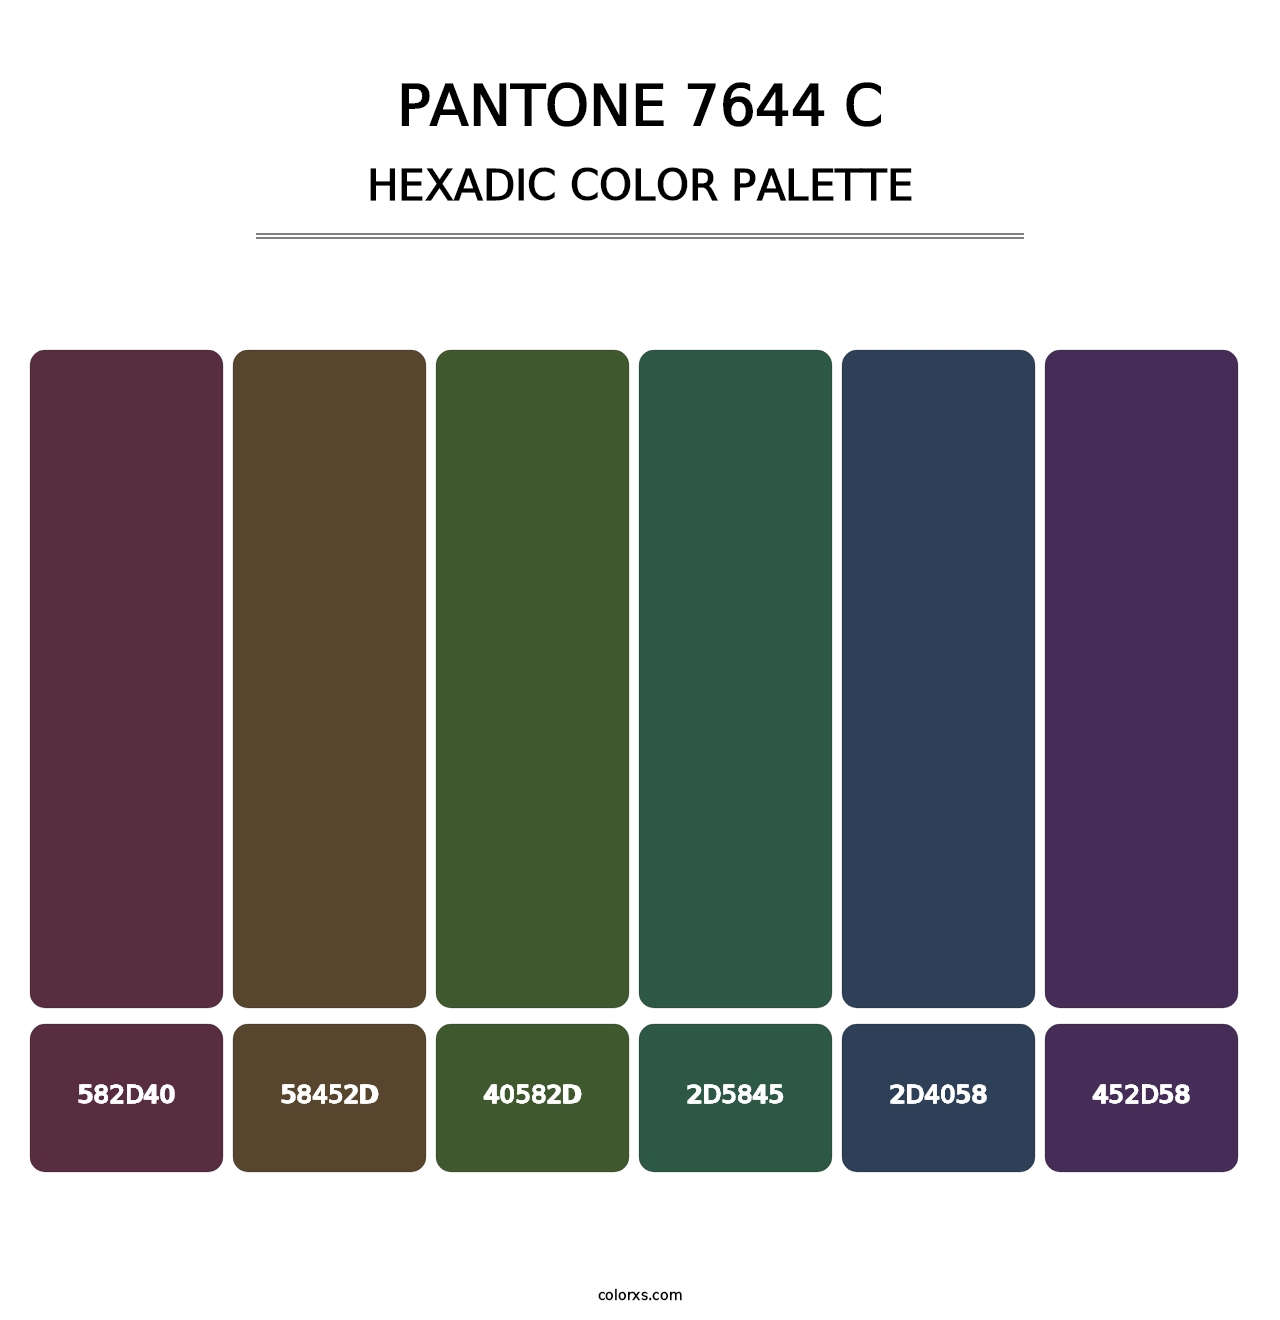 PANTONE 7644 C - Hexadic Color Palette